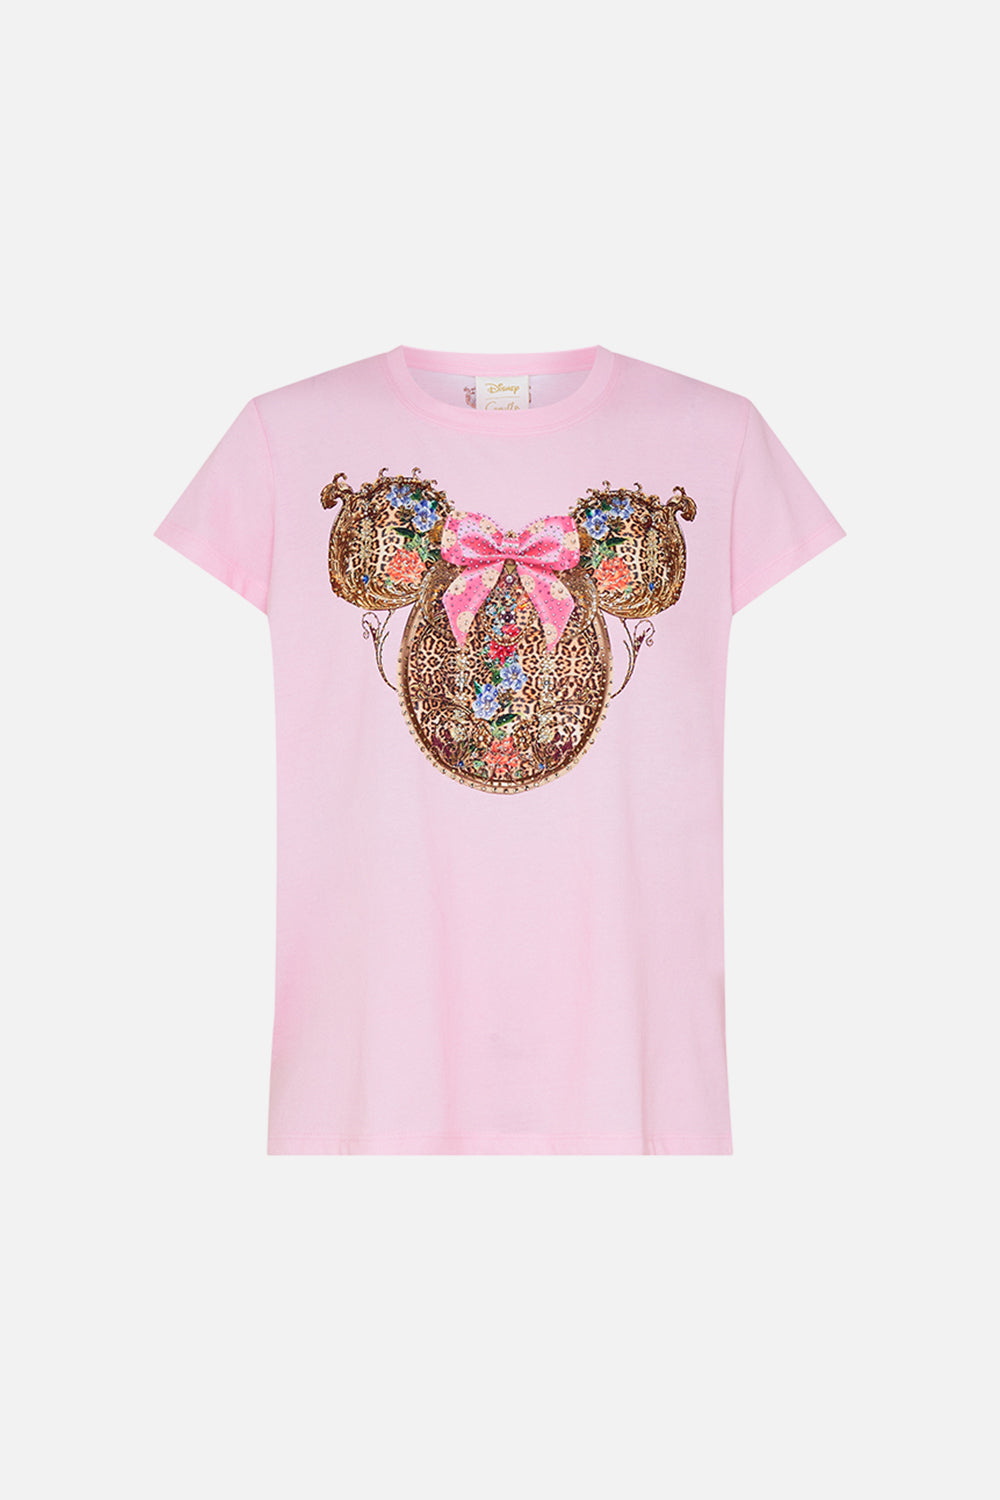 Disney x CAMILLA pink t shirt in Minnie Mouse Magic print